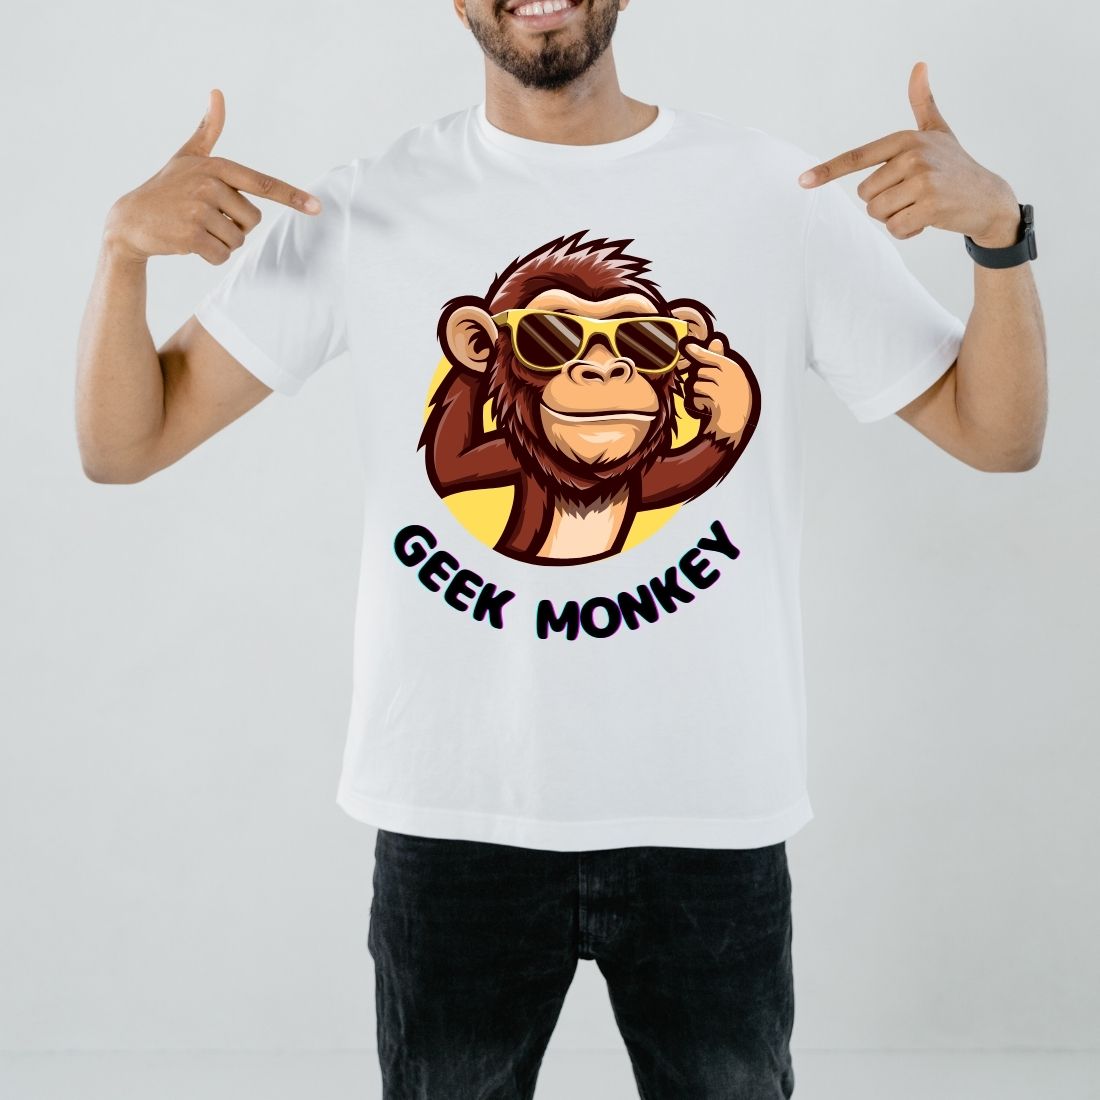 Cute Geek Monkey Design preview image.